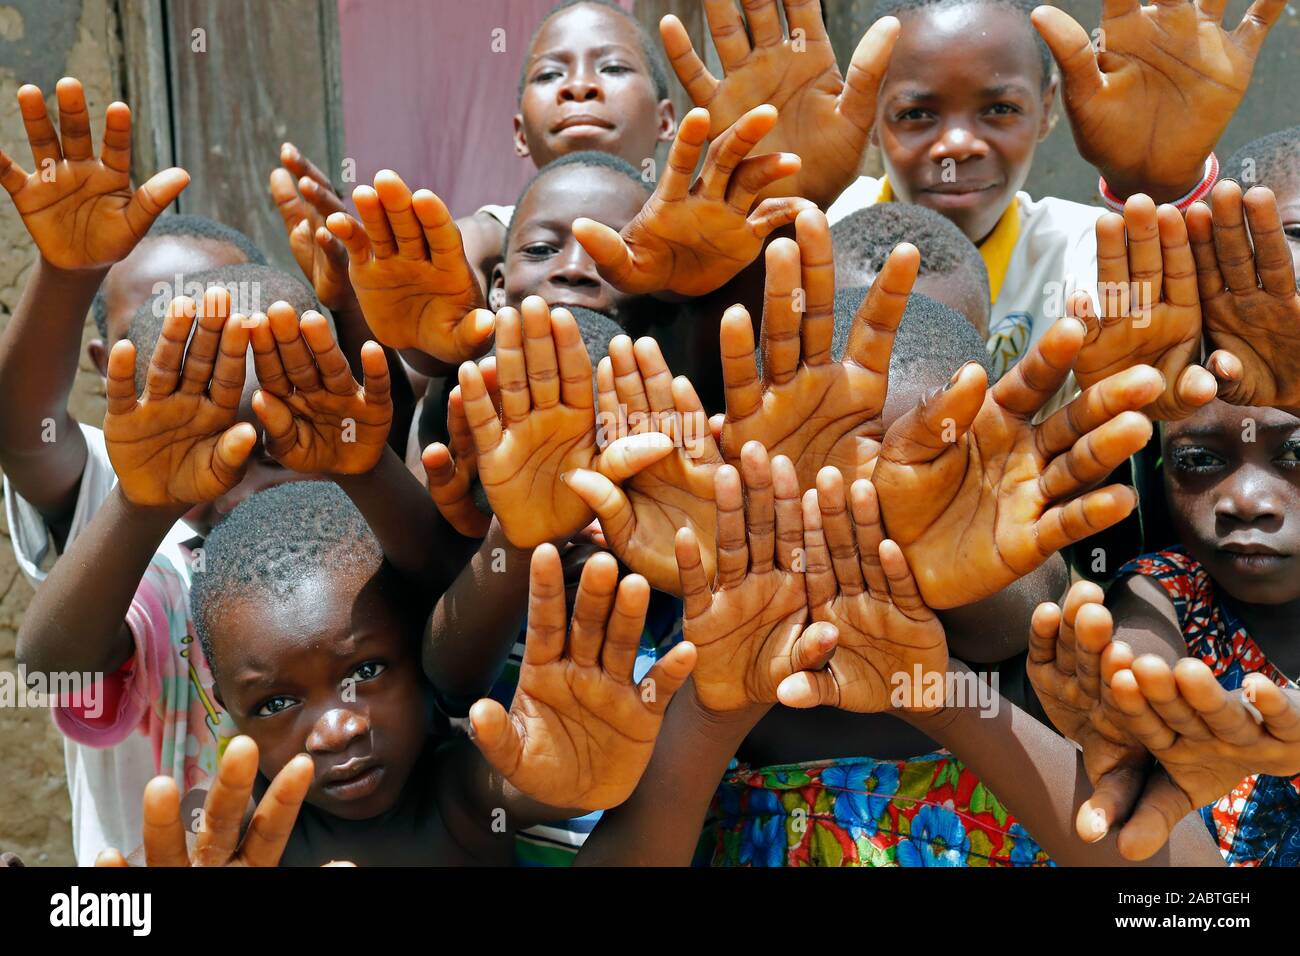 African village. Group of children showing their hands.  Datcha-Attikpaye. Togo. Stock Photo